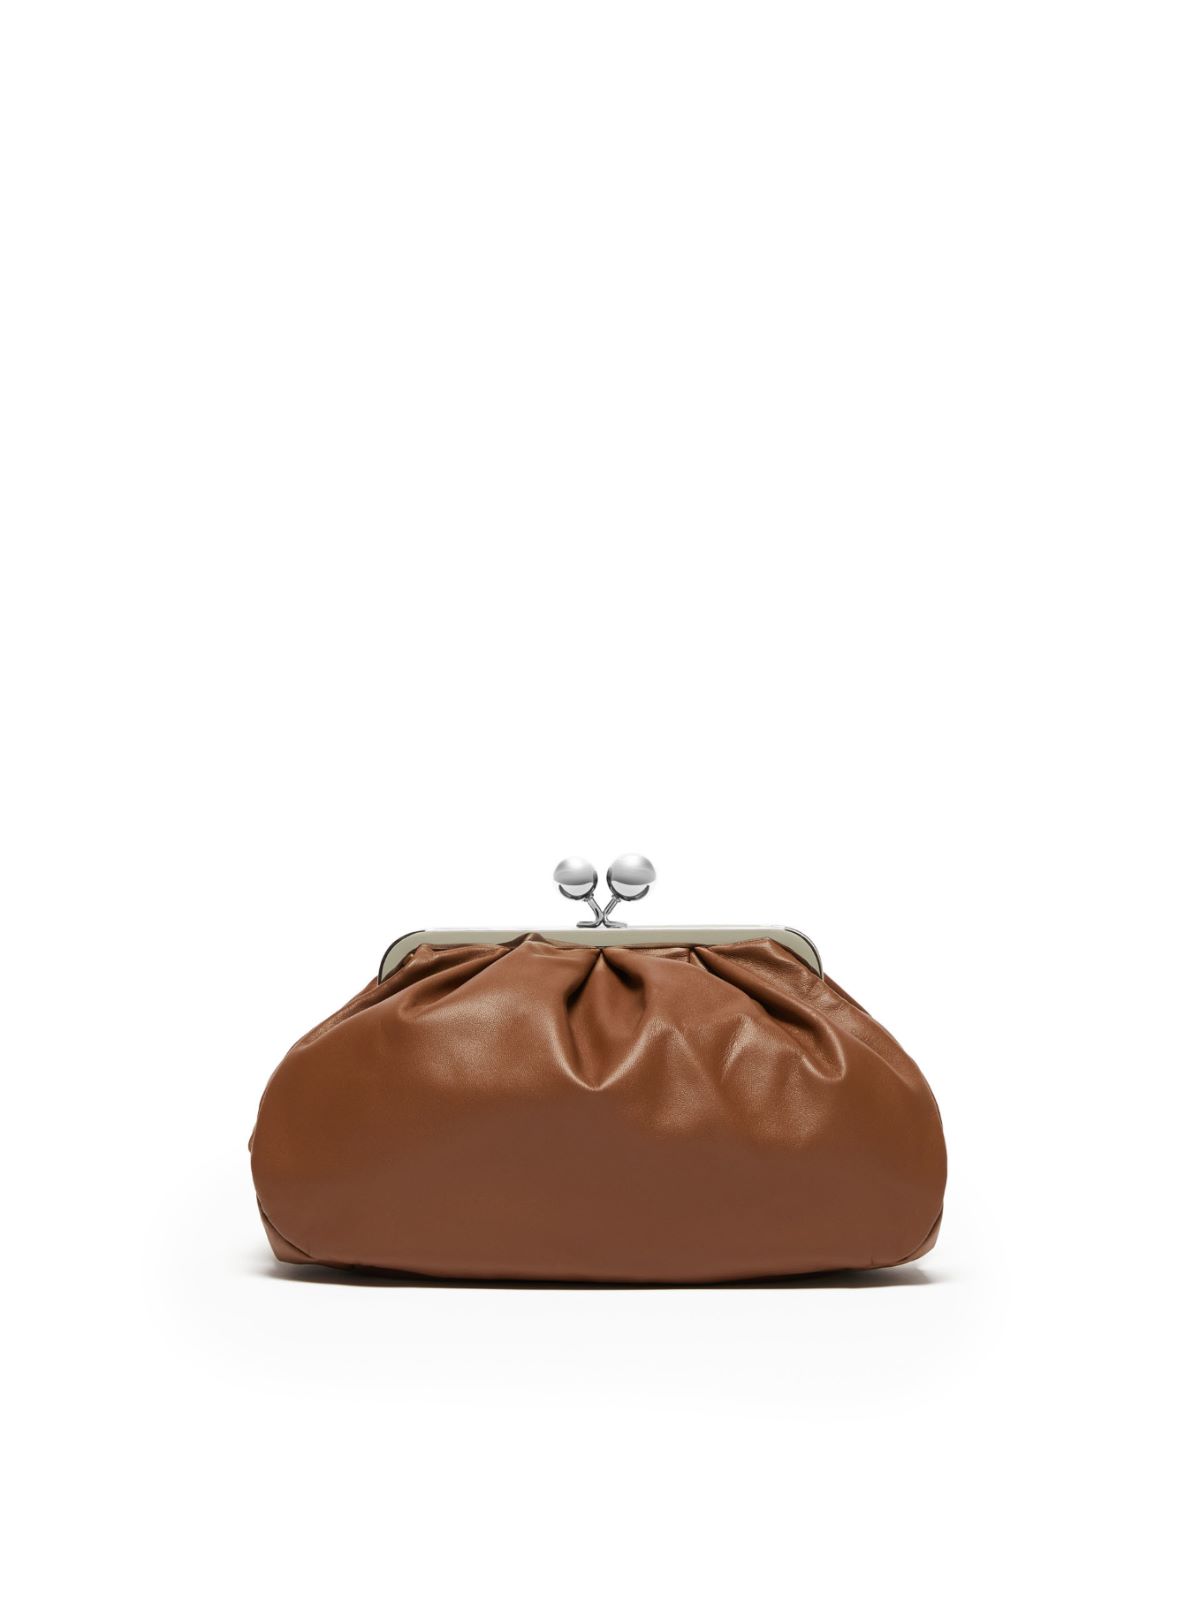 Medium Pasticcino Bag in nappa leather - TOBACCO - Weekend Max Mara - 3